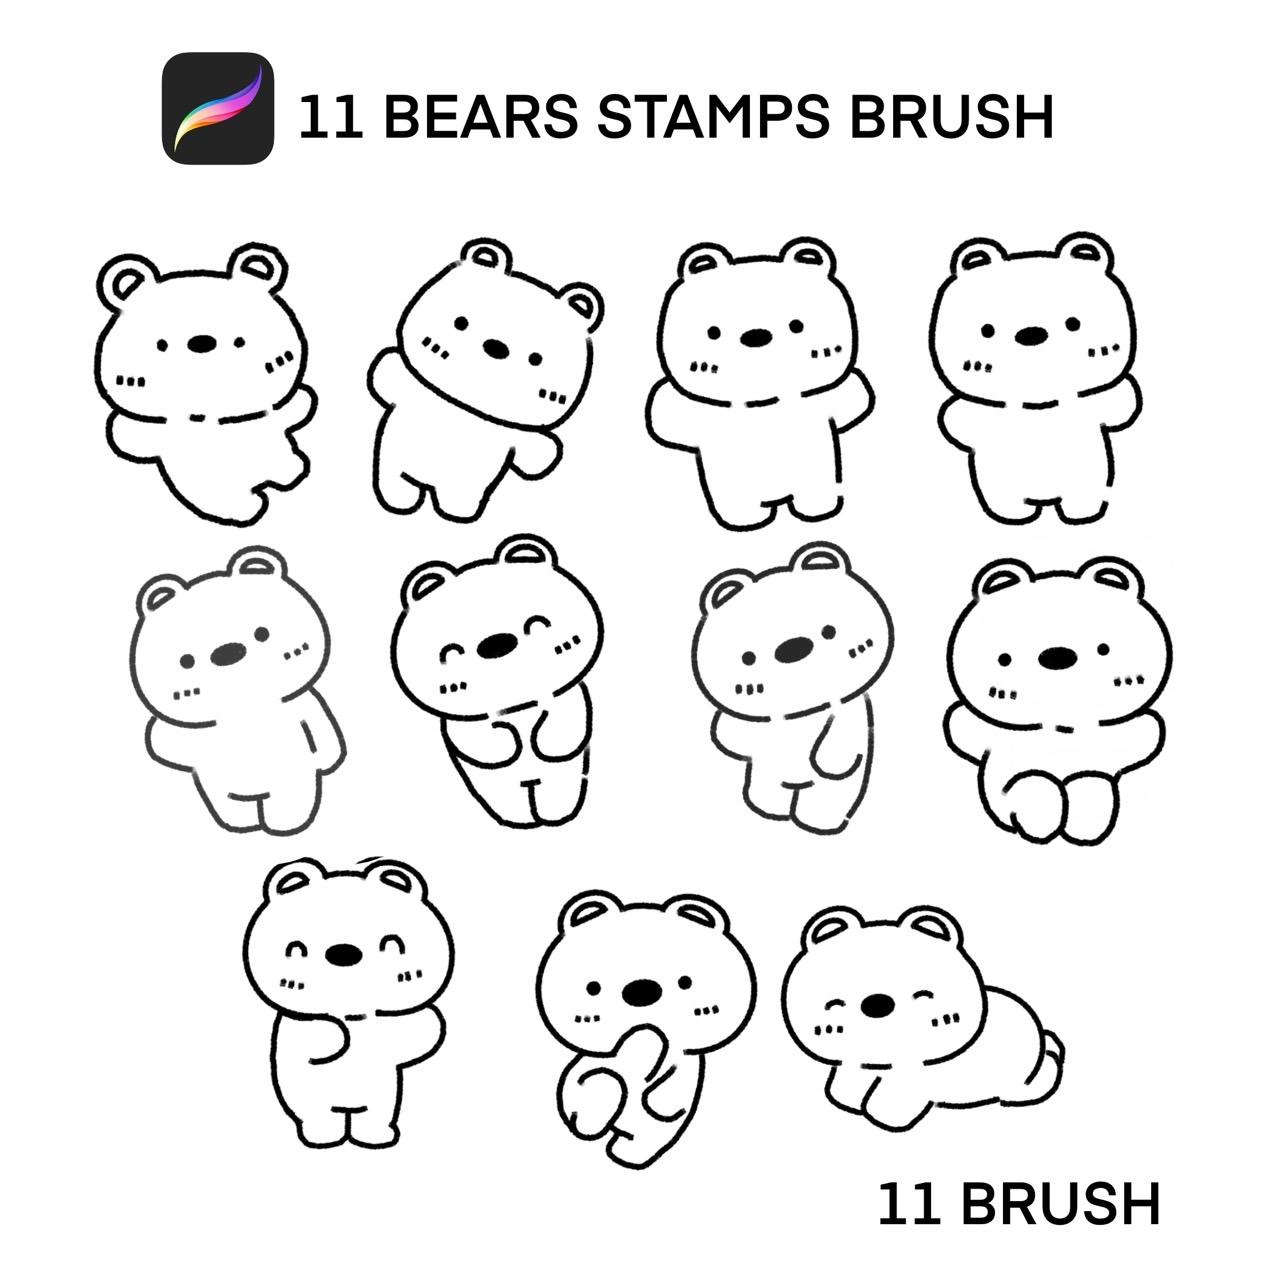 11 BEARS STAMPS BRUSH